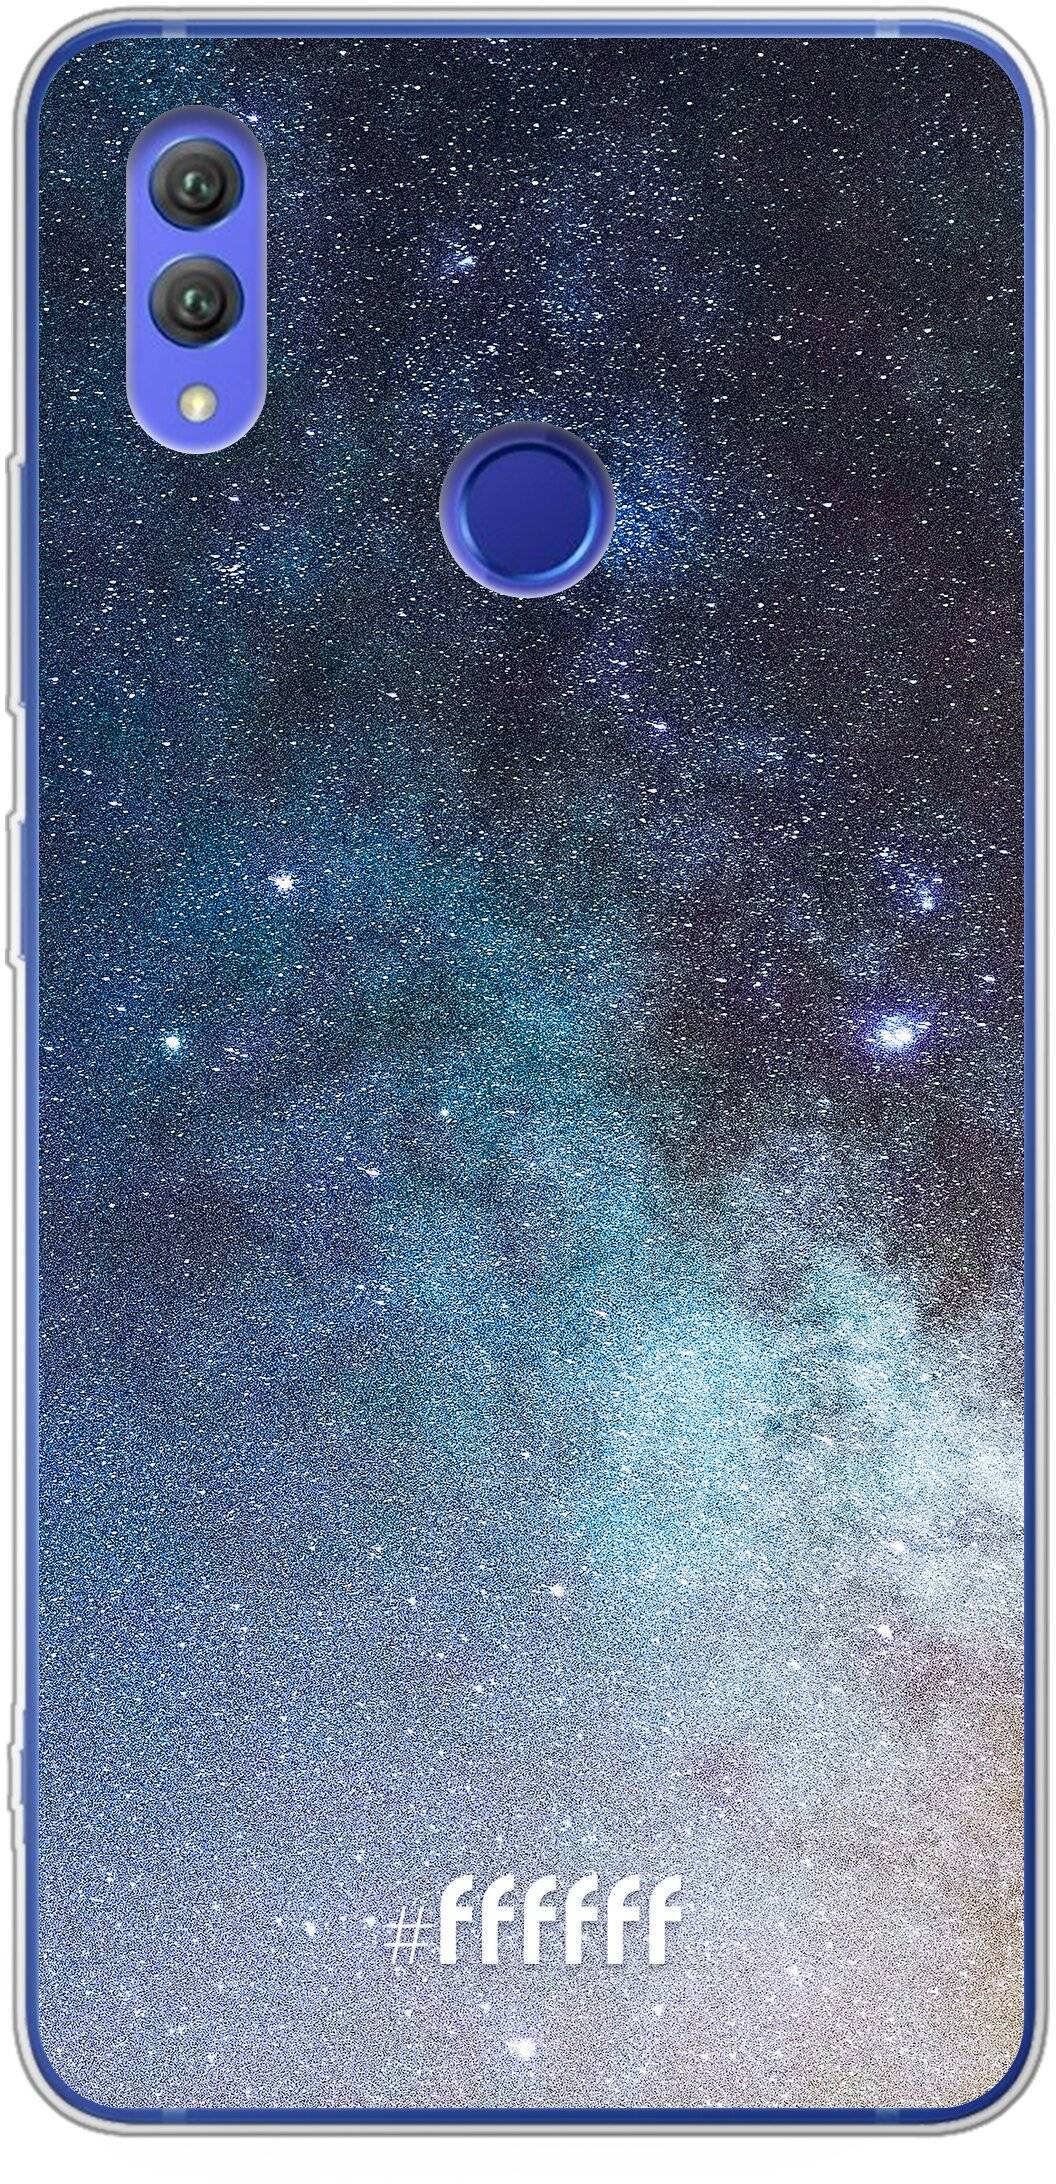 Milky Way Note 10